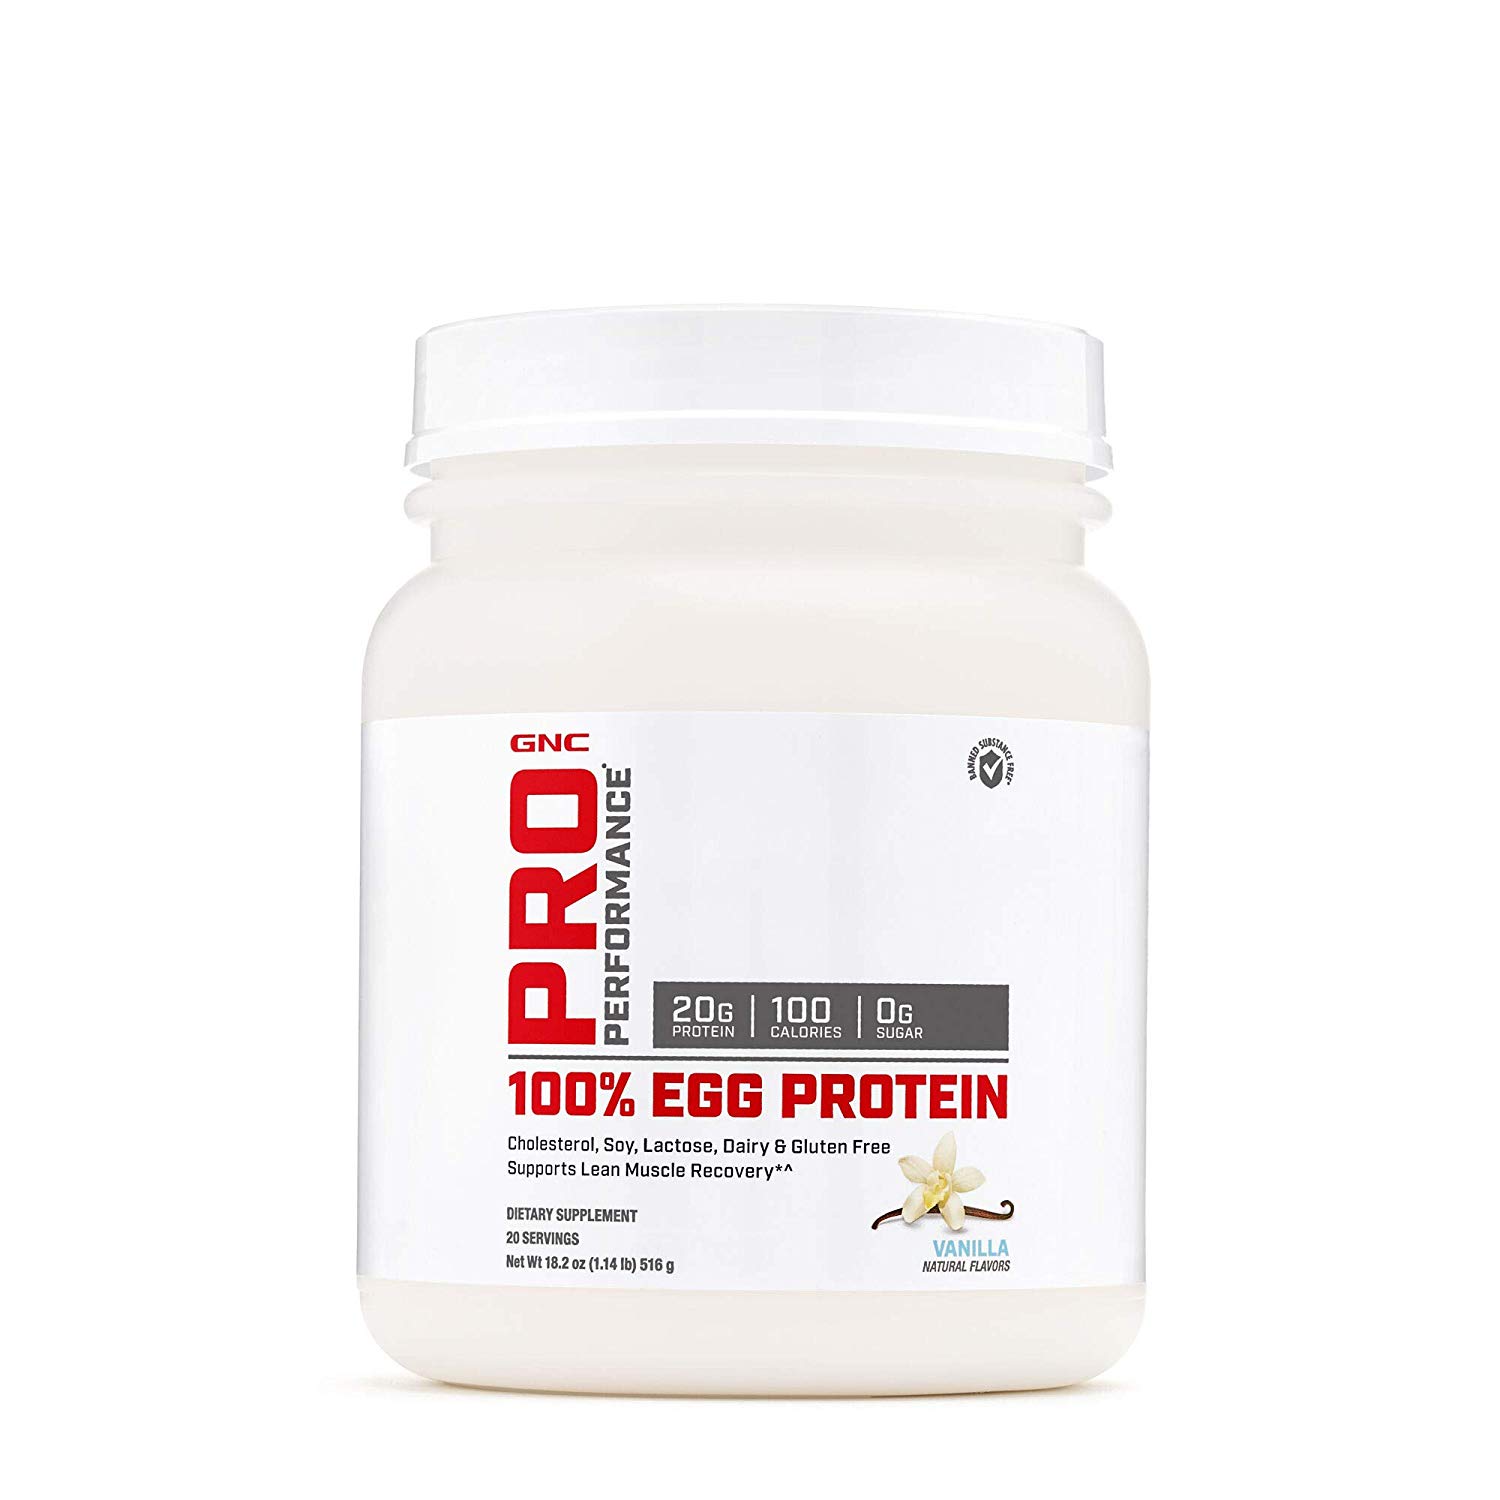 GNC Pro Performance 100% Egg Protein